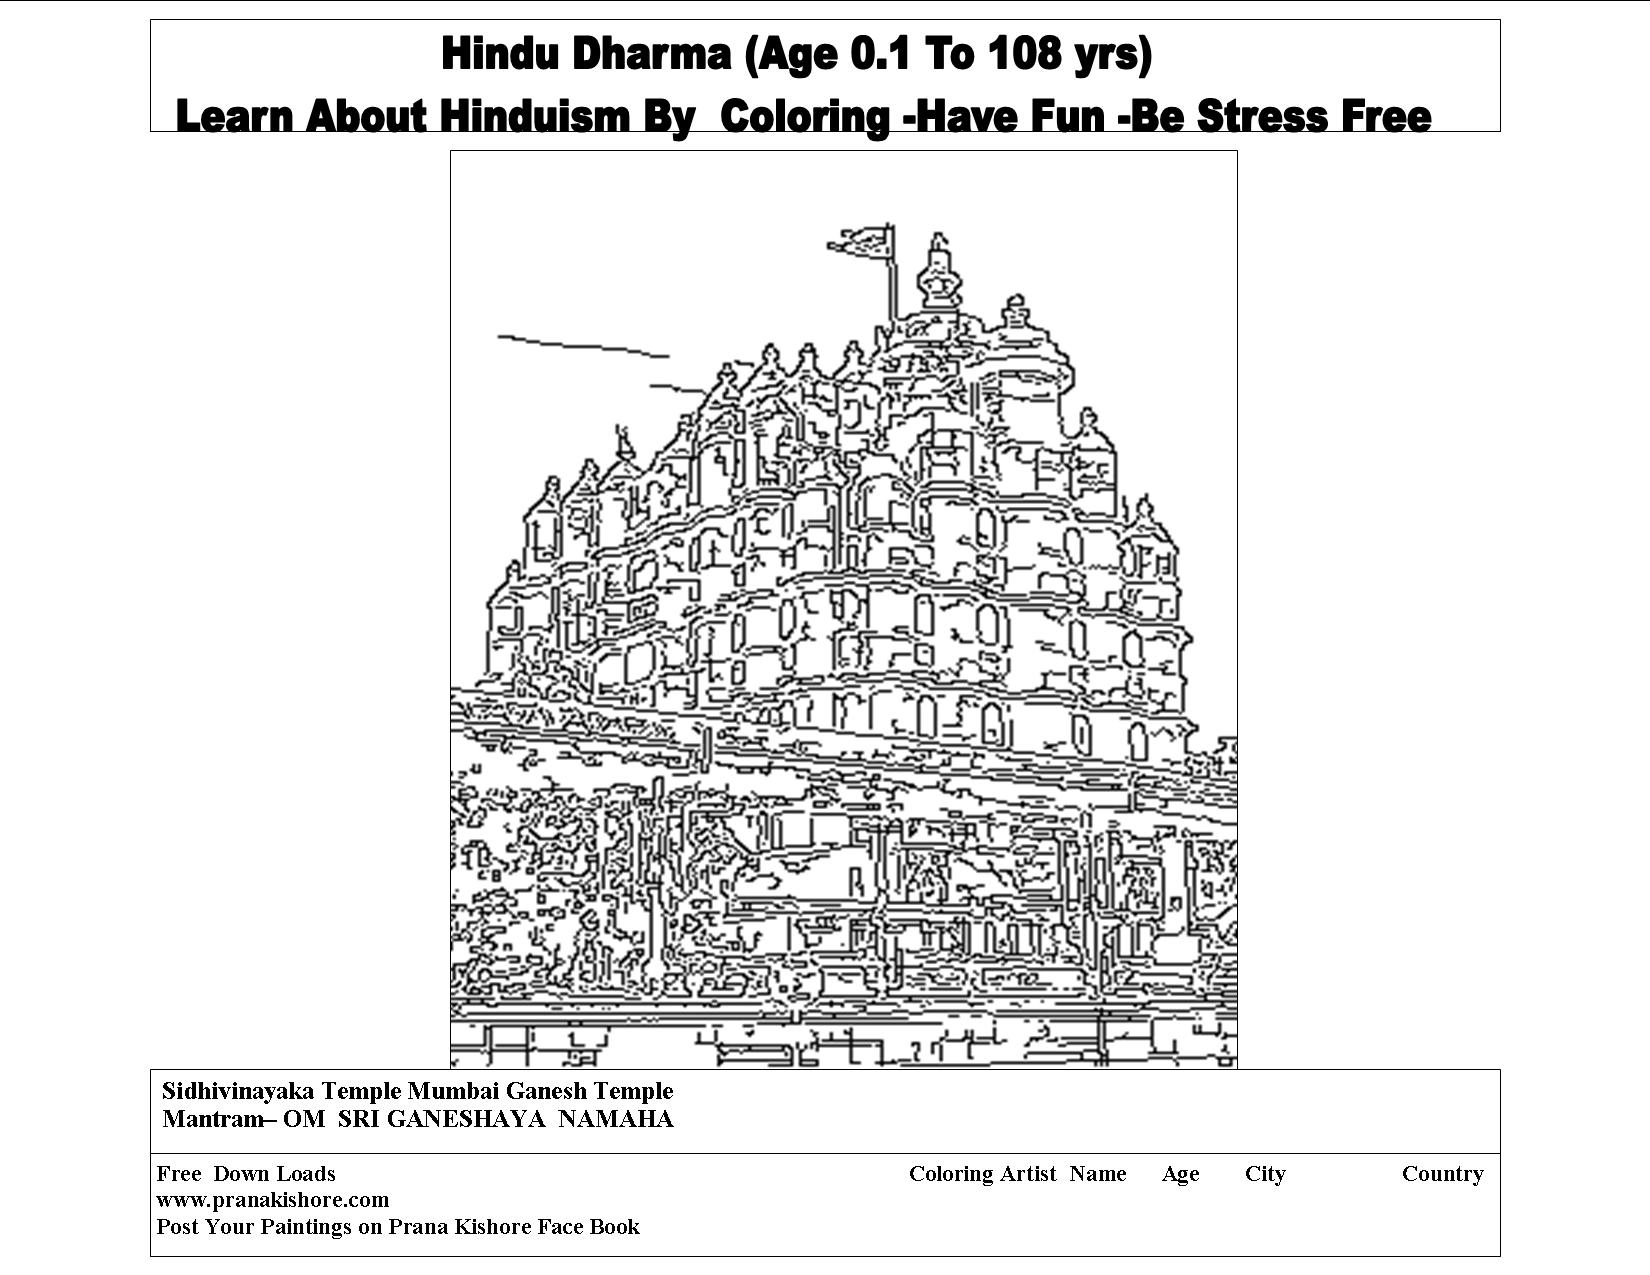 Hindu Dharma Coloring- Sidhivinayaka Temple Mumbai